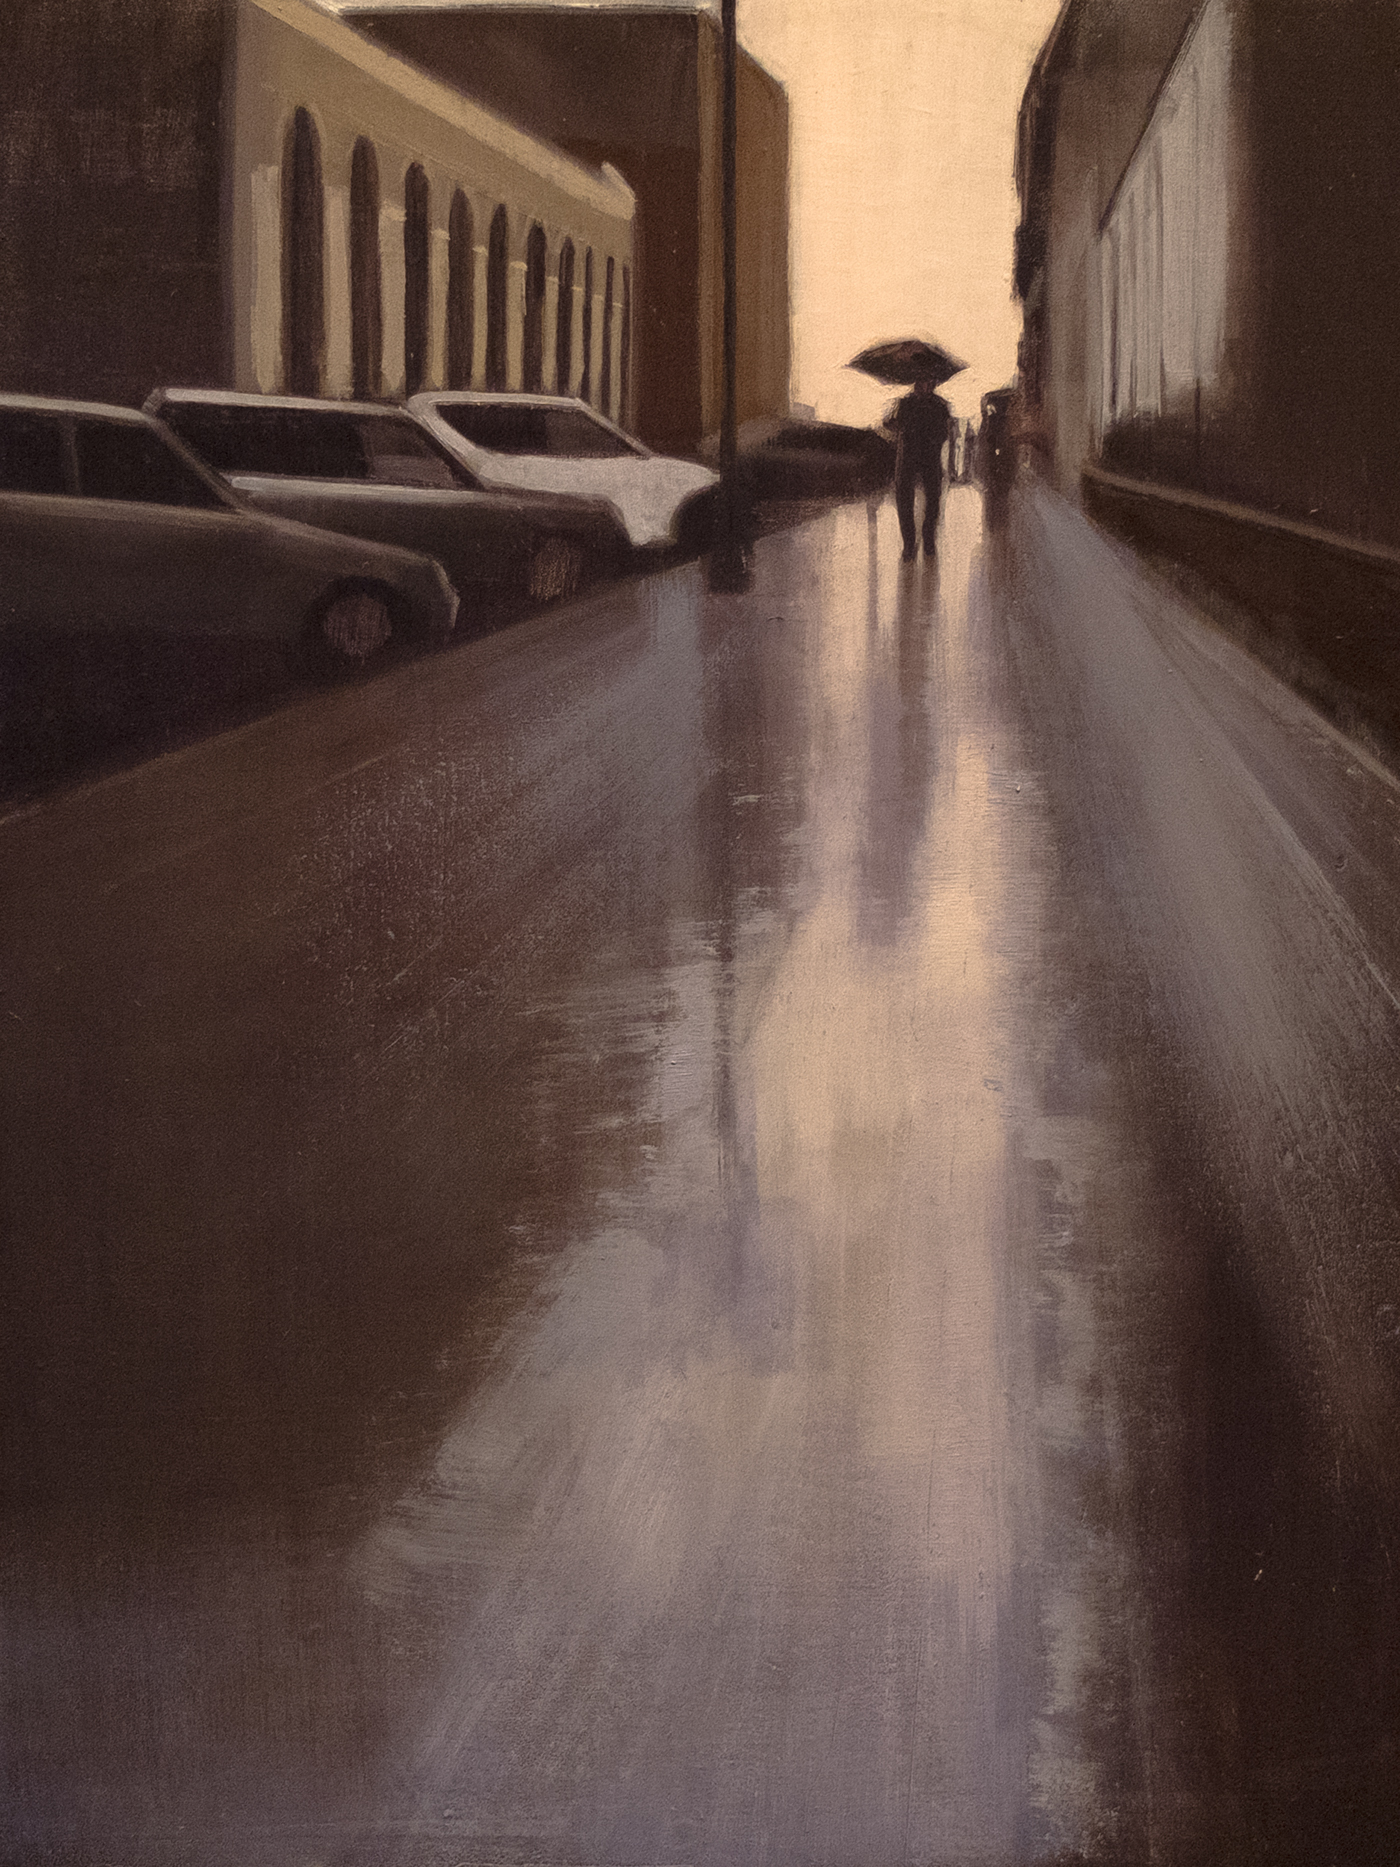 representational realist Realism Street rain city Urban contemporary